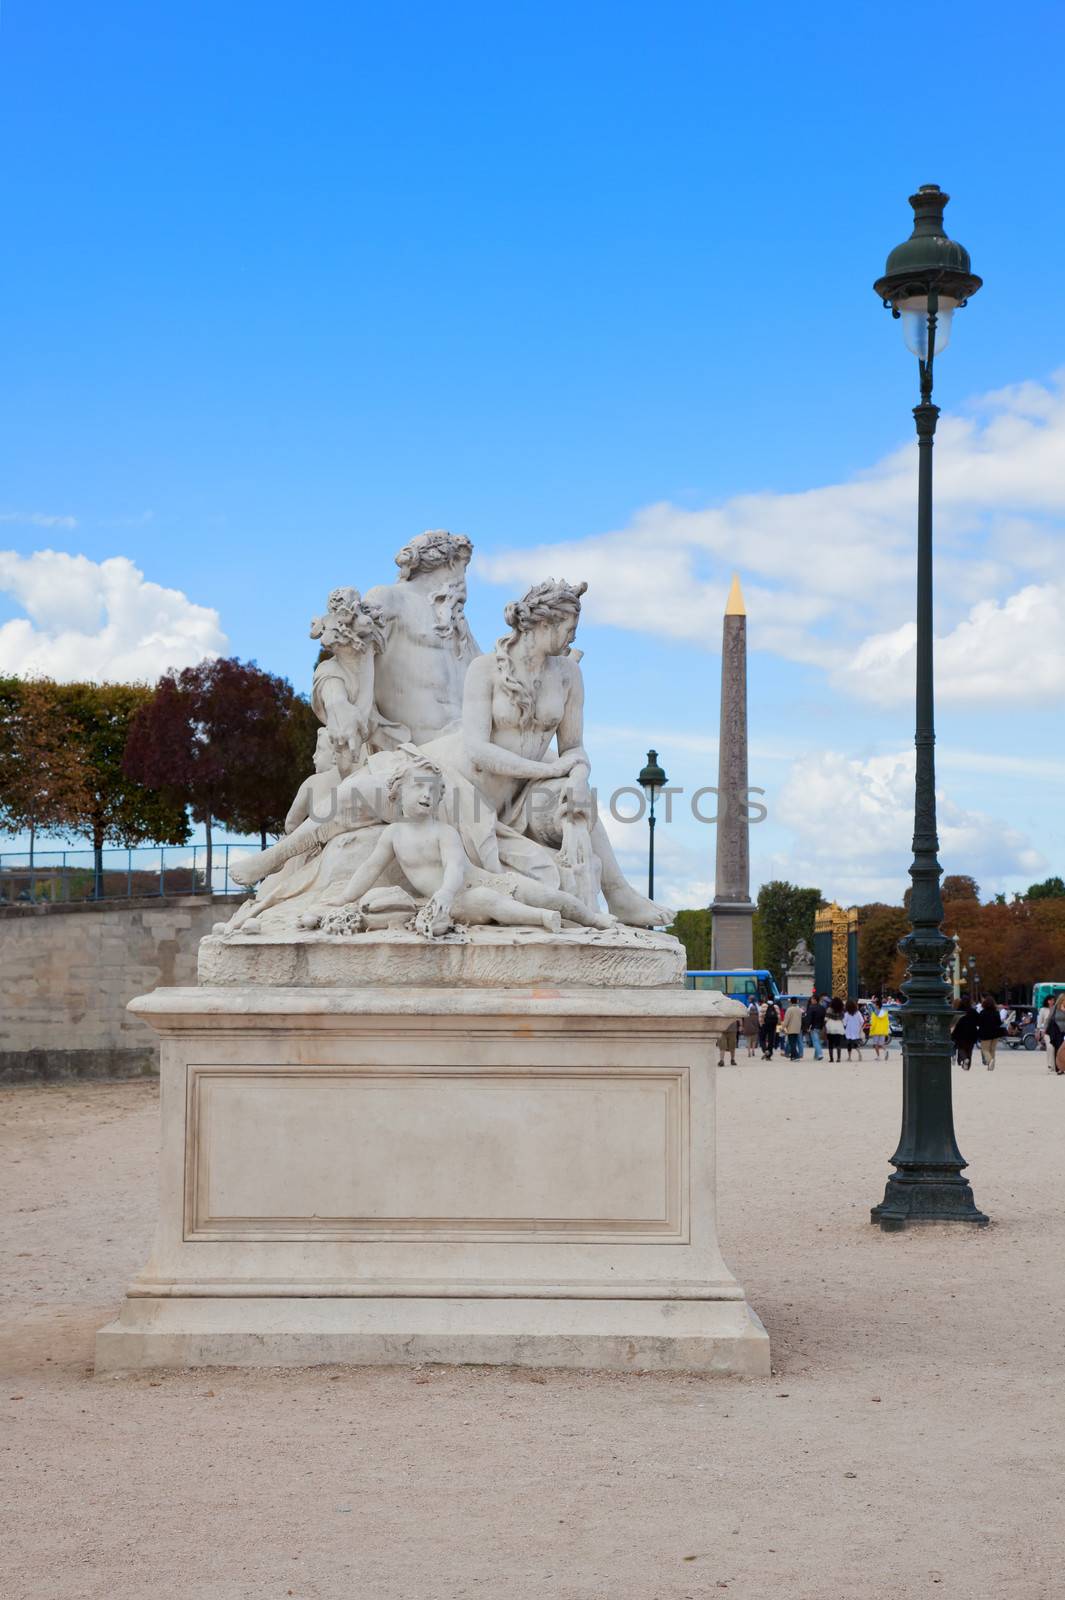 Paris - Statue from Tuileries garden near Louvre